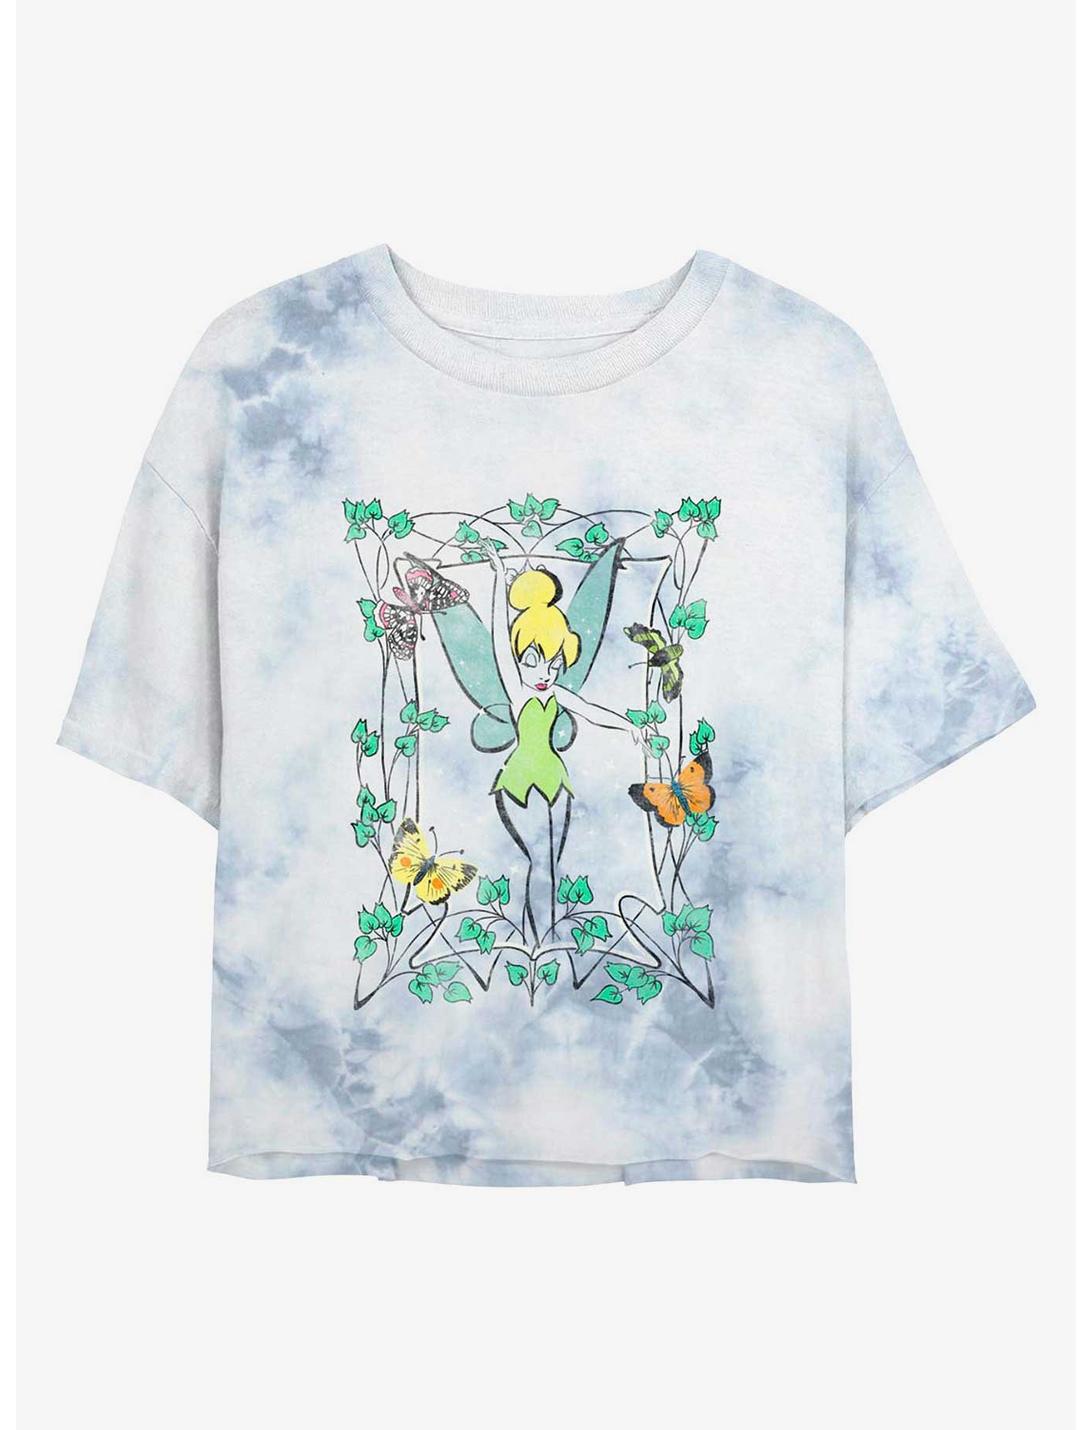 Disney Tinker Bell Illustration Tie-Dye Girls Crop T-Shirt, WHITEBLUE, hi-res